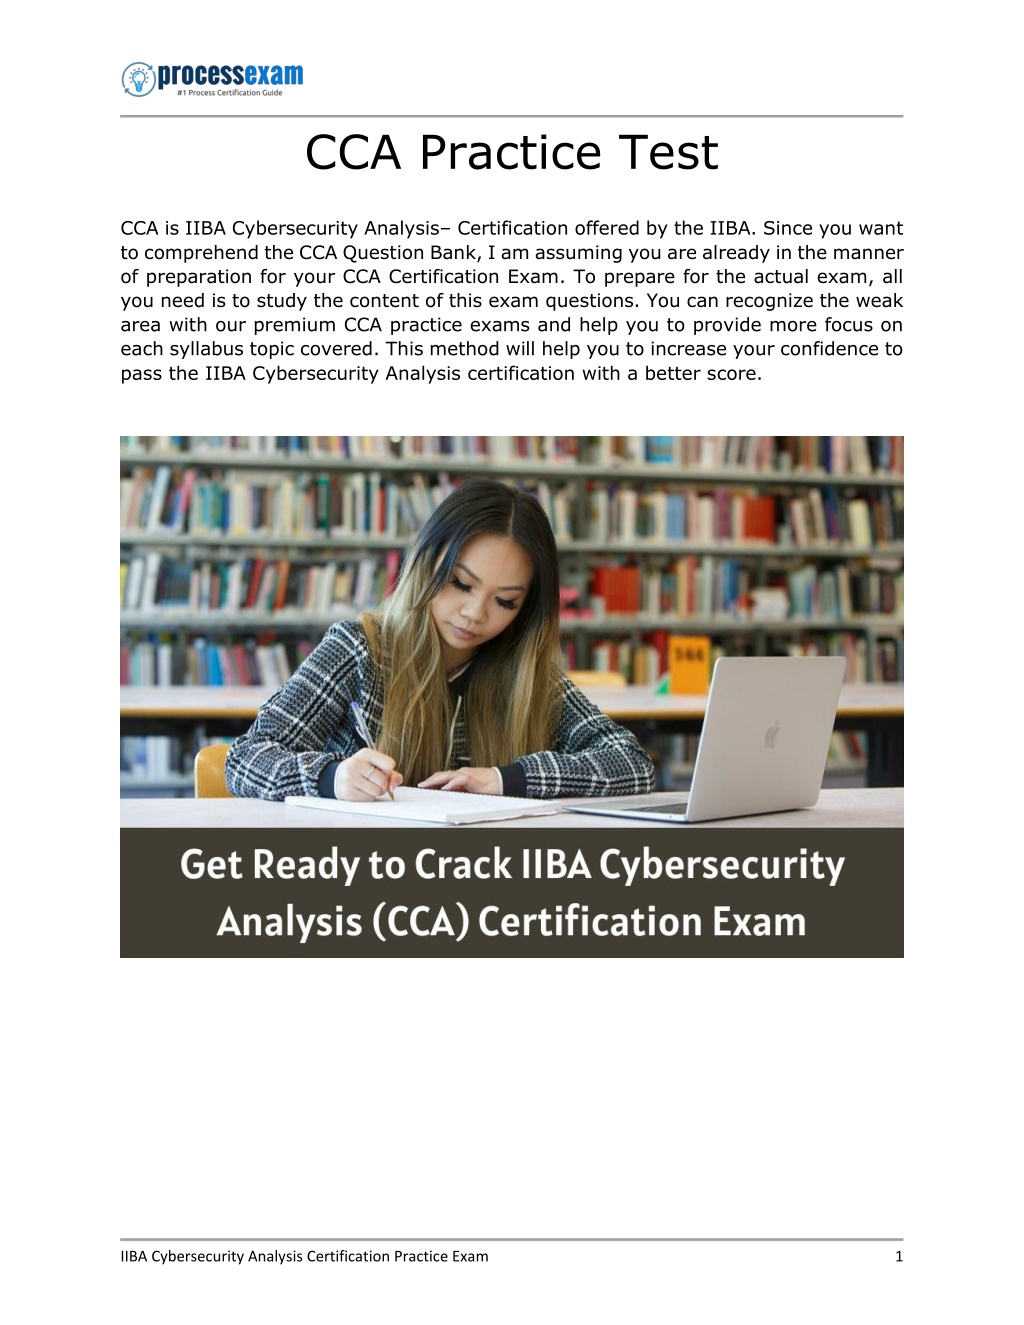 PPT Mastering the IIBA Cybersecurity Analysis (CCA) Certification